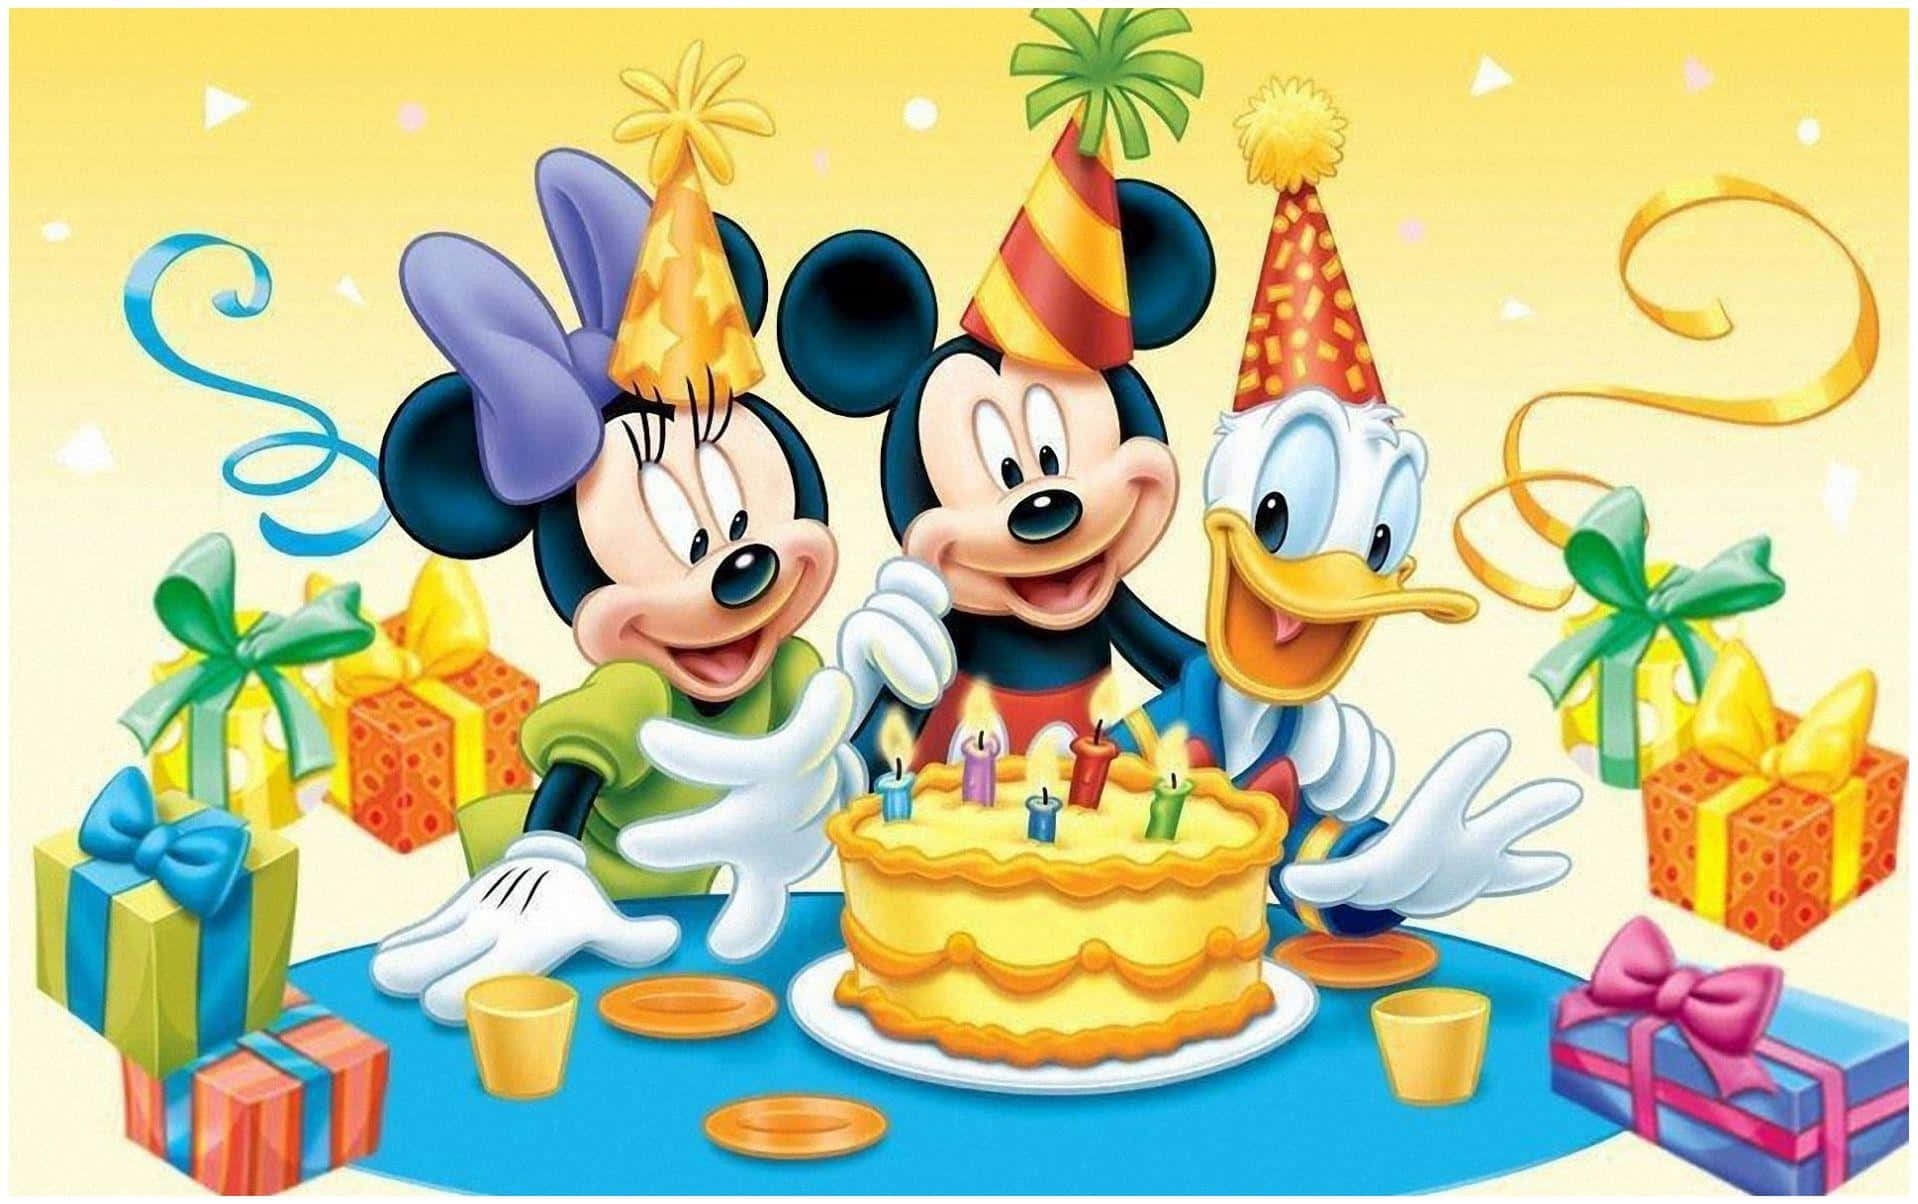 Disney Birthday Wallpaper